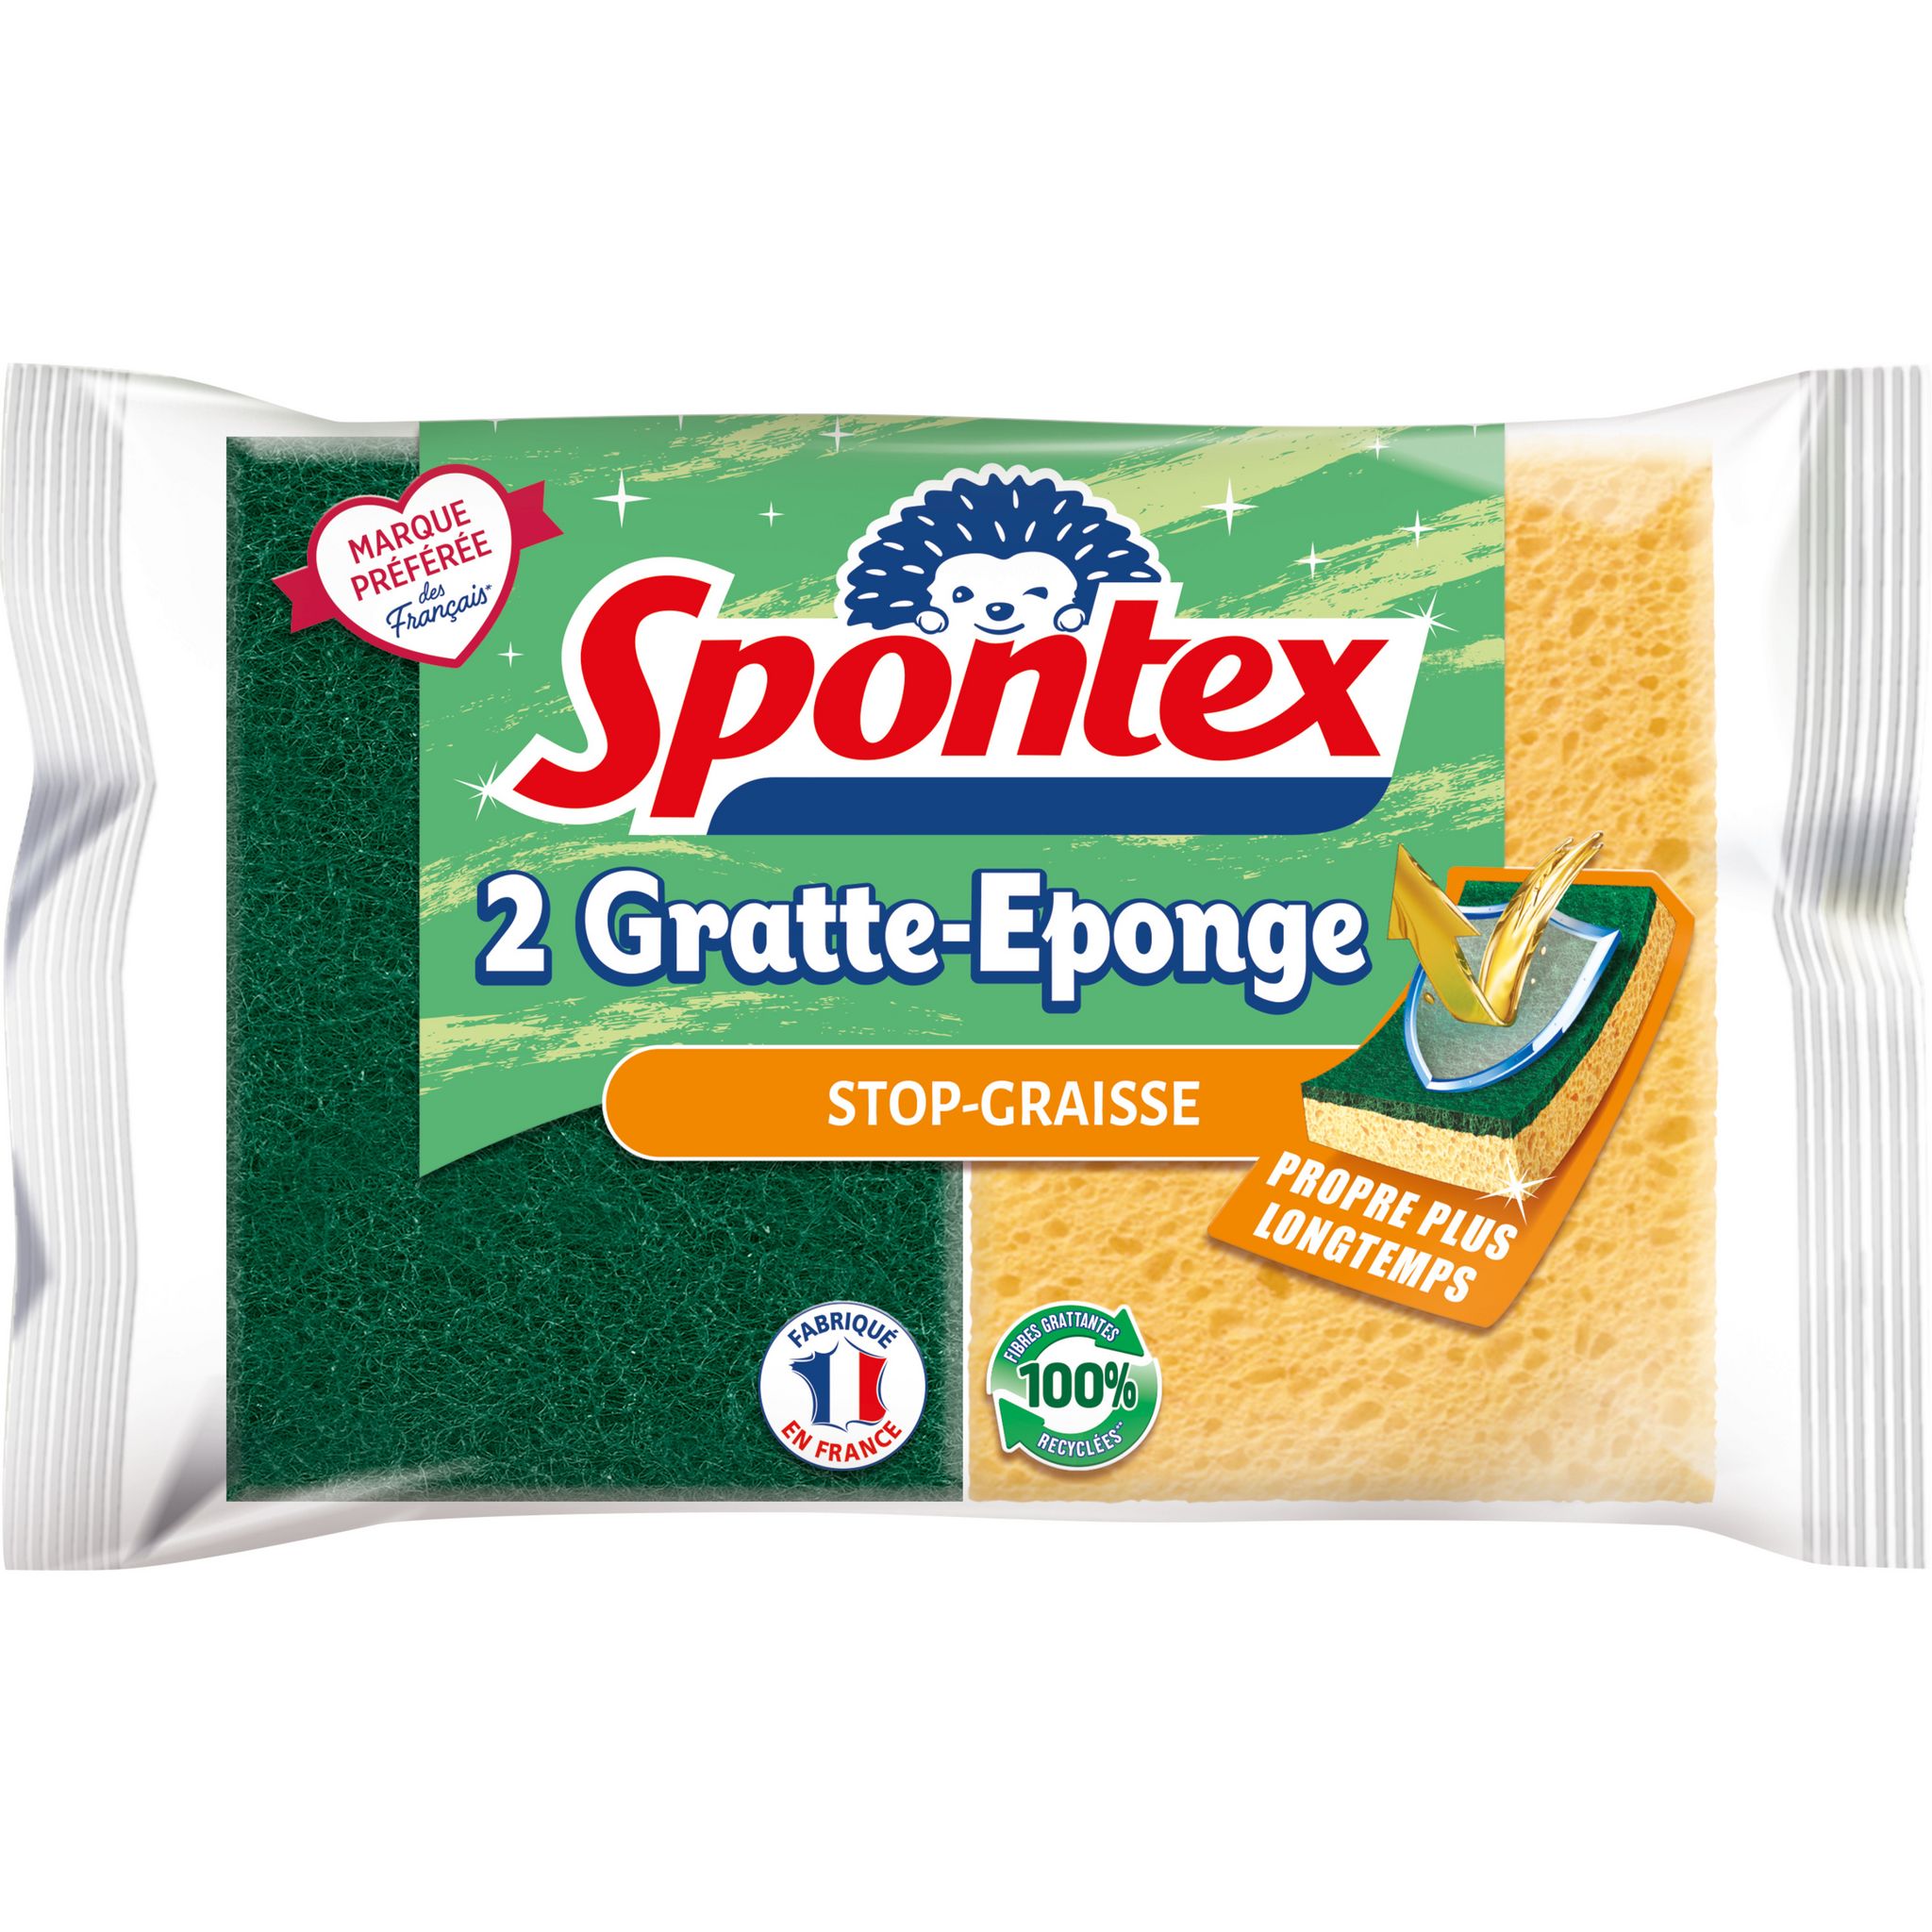 SPONTEX EPONGE SALLE DE BAIN